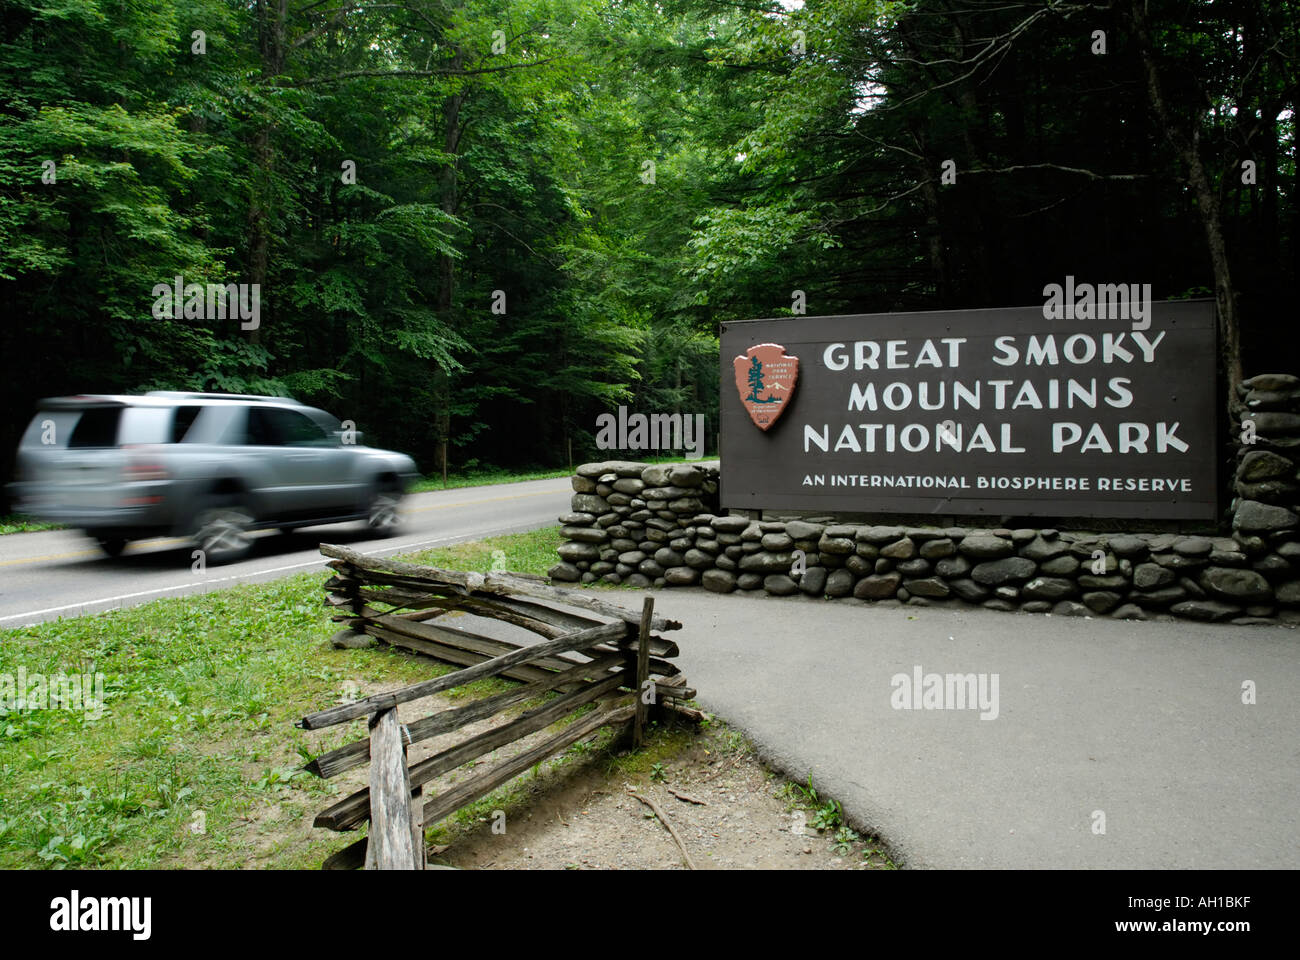 Auto SUV carrello entrando in Great Smoky Mountains National Park, ingresso sign Foto Stock